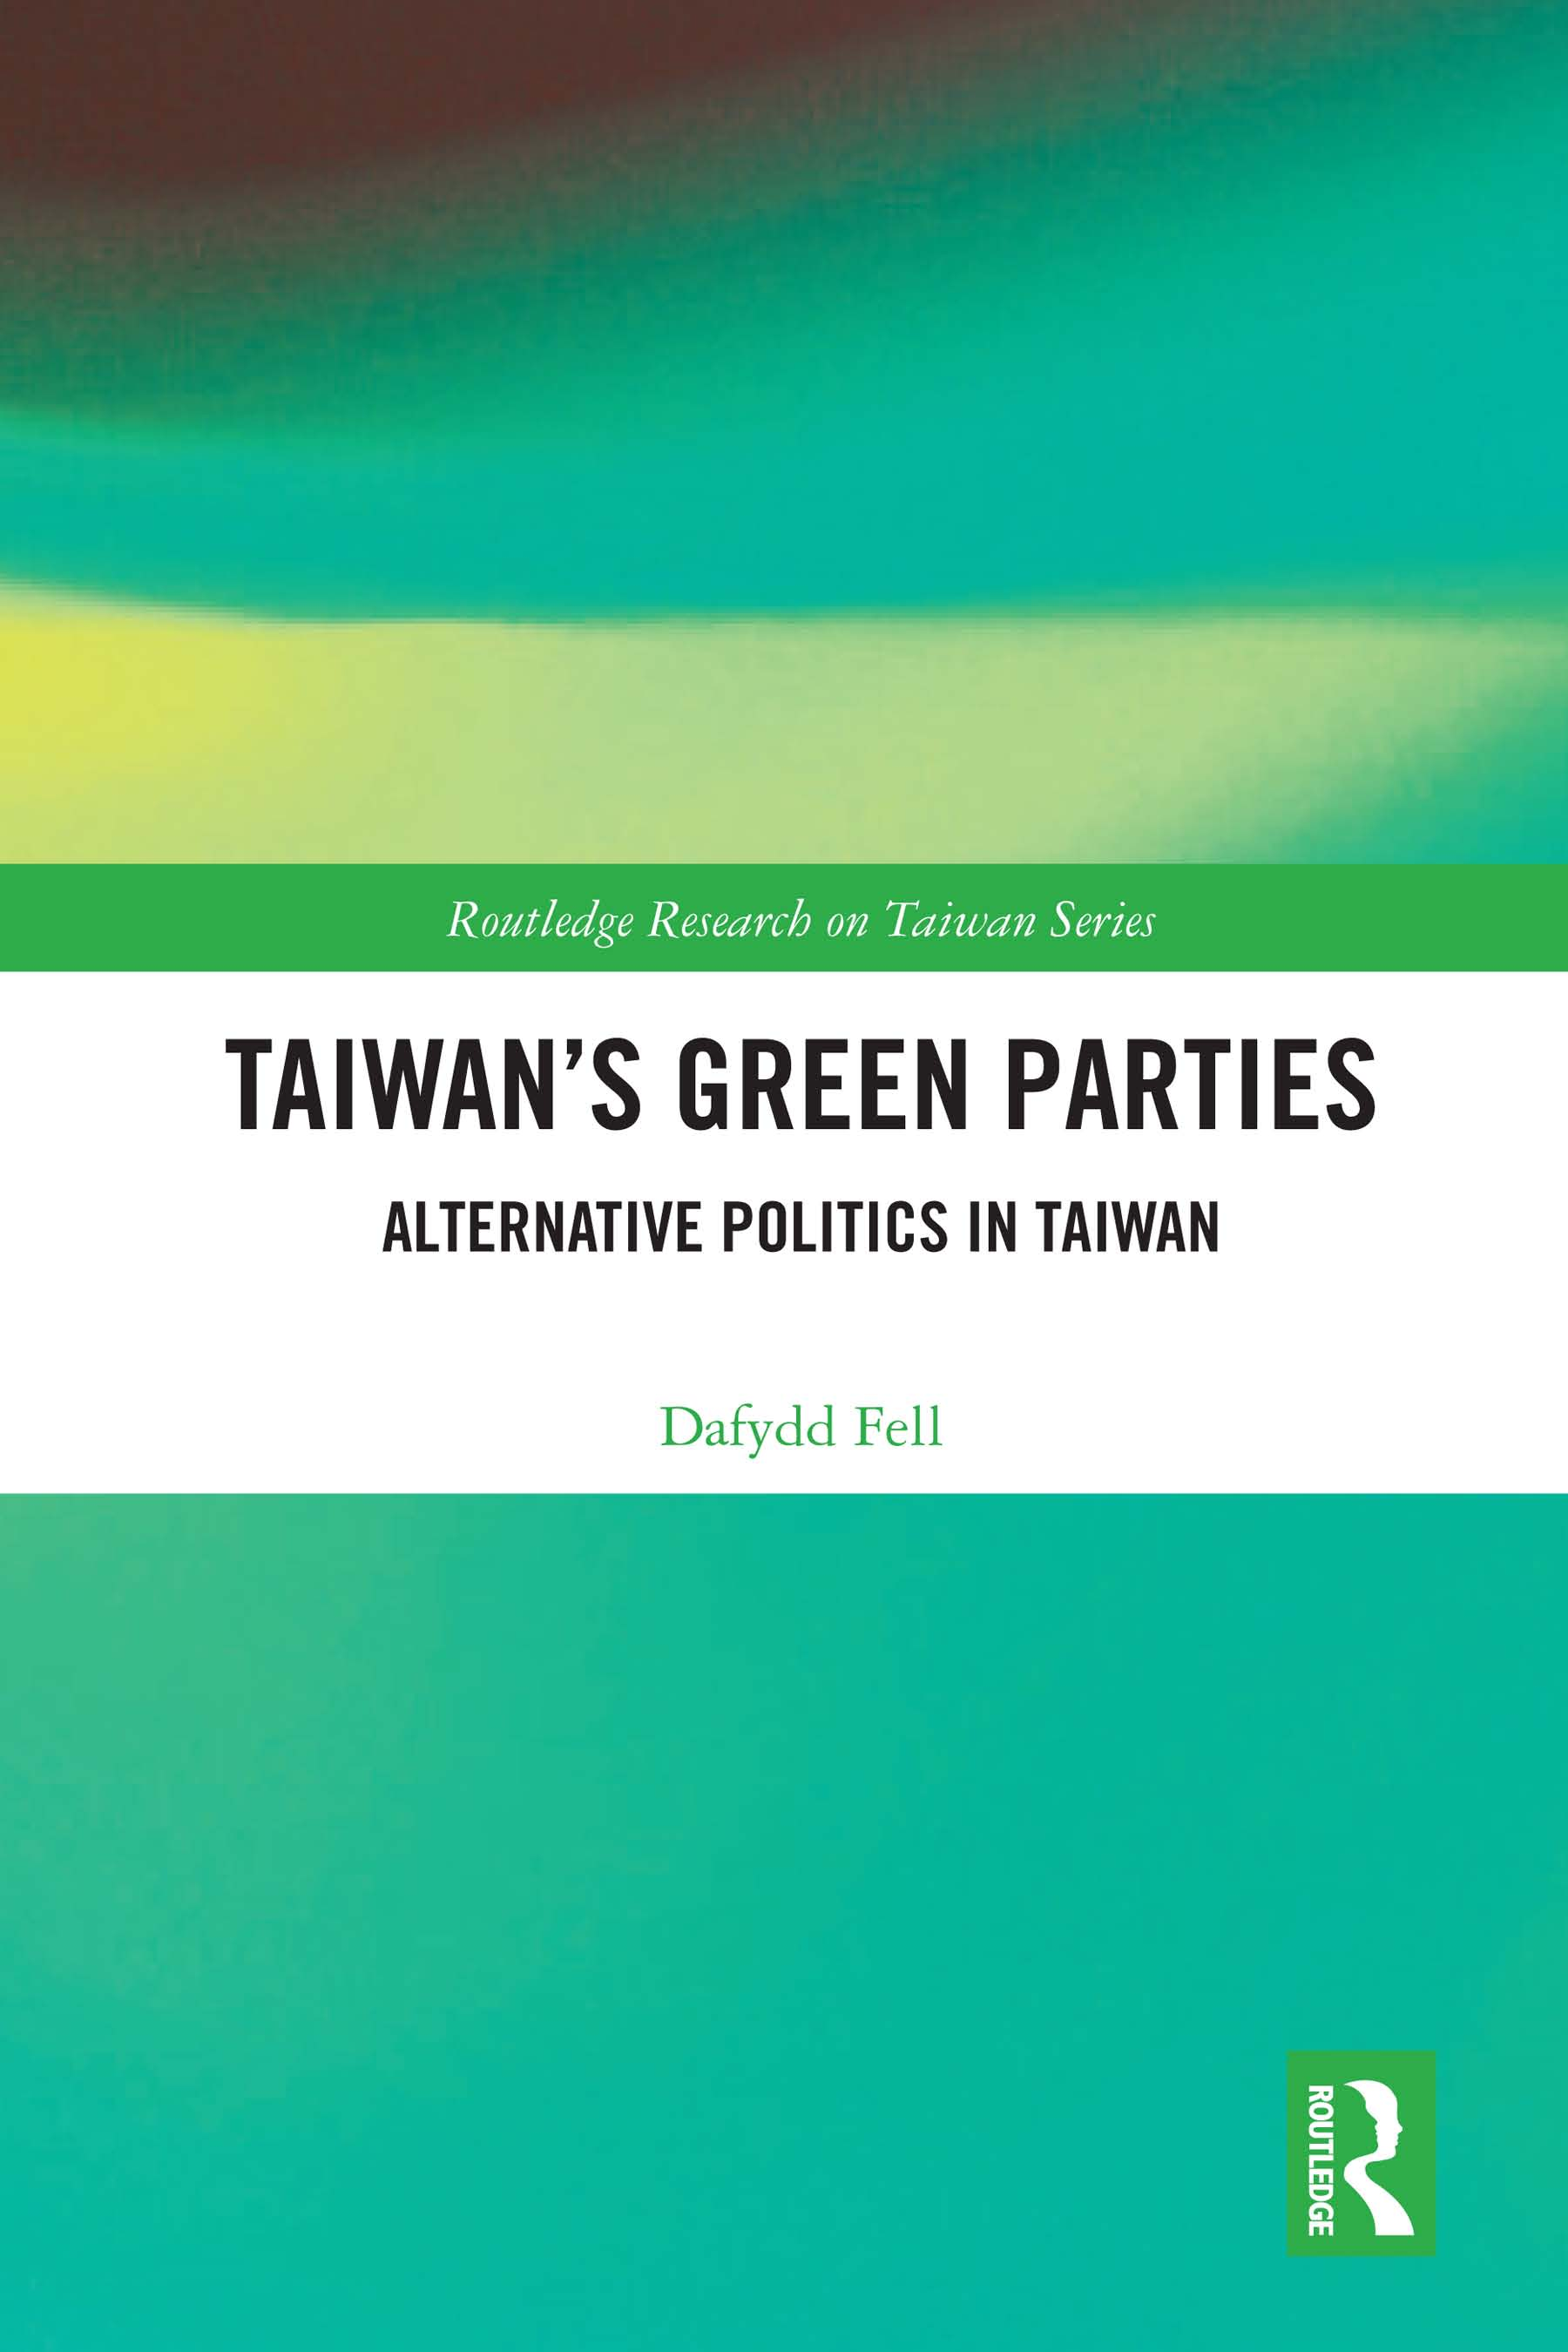 Taiwan Green Parties: Alternative Politics in Taiwan